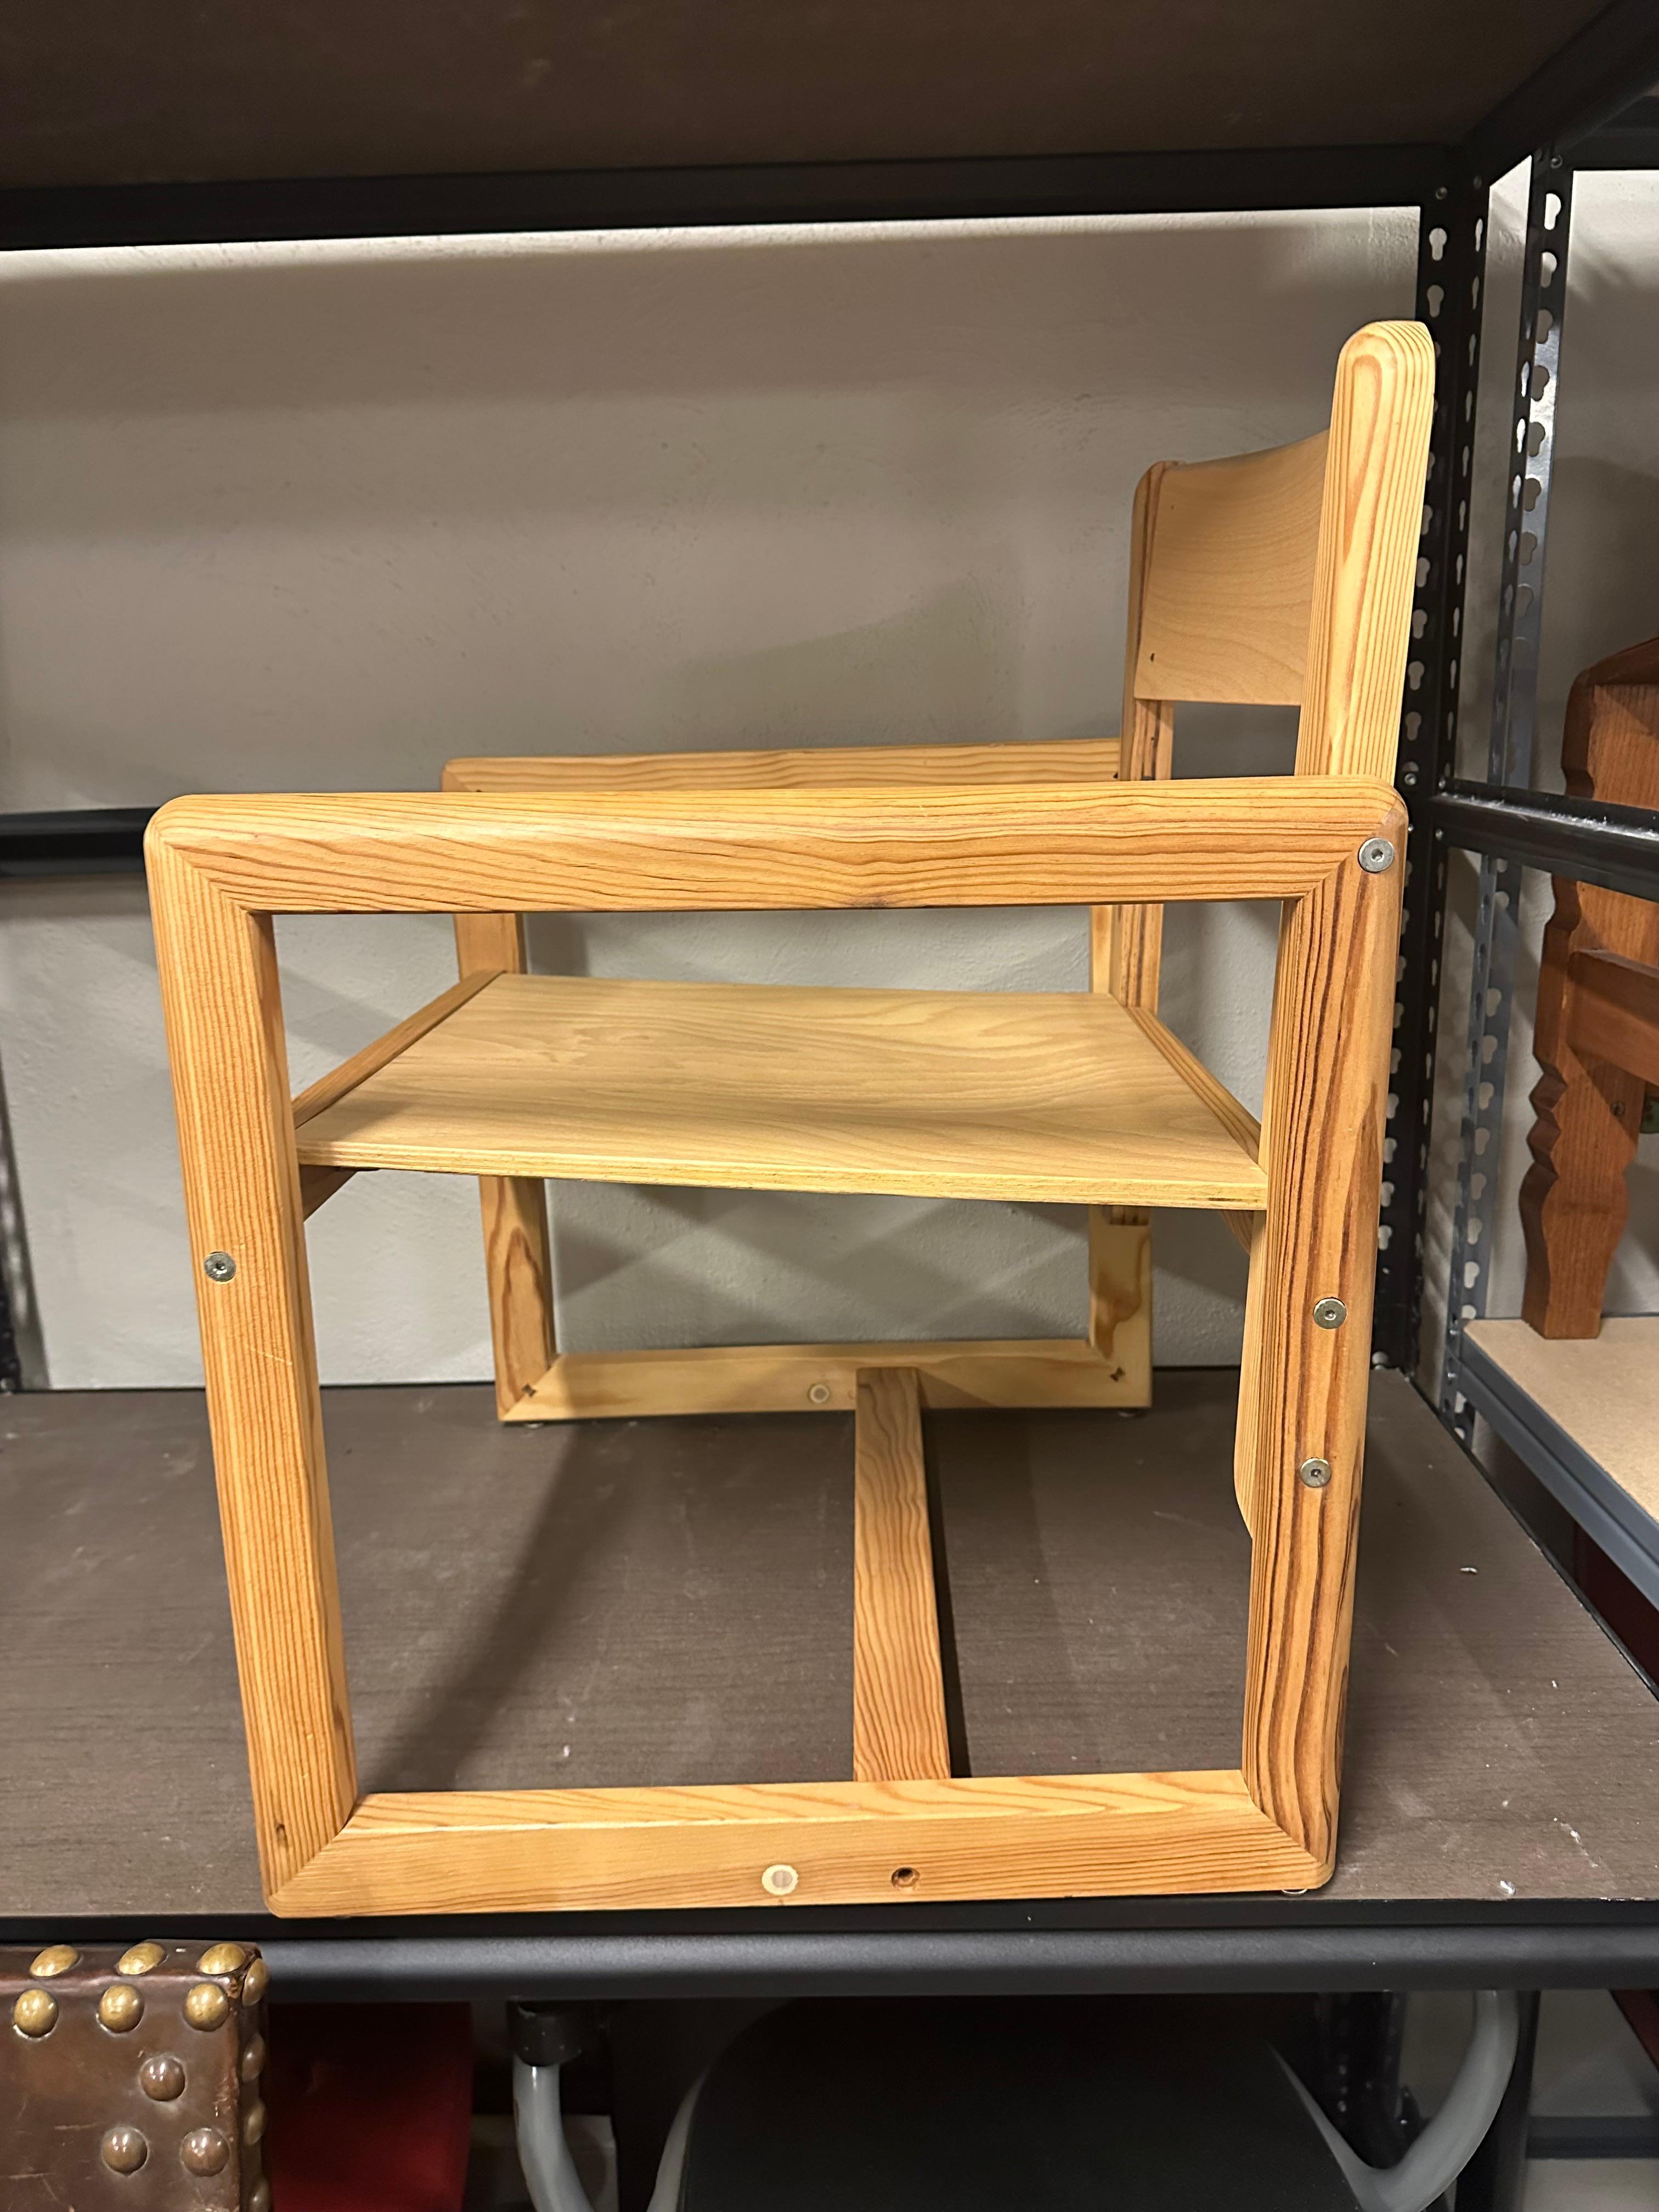 wooden dorm chair